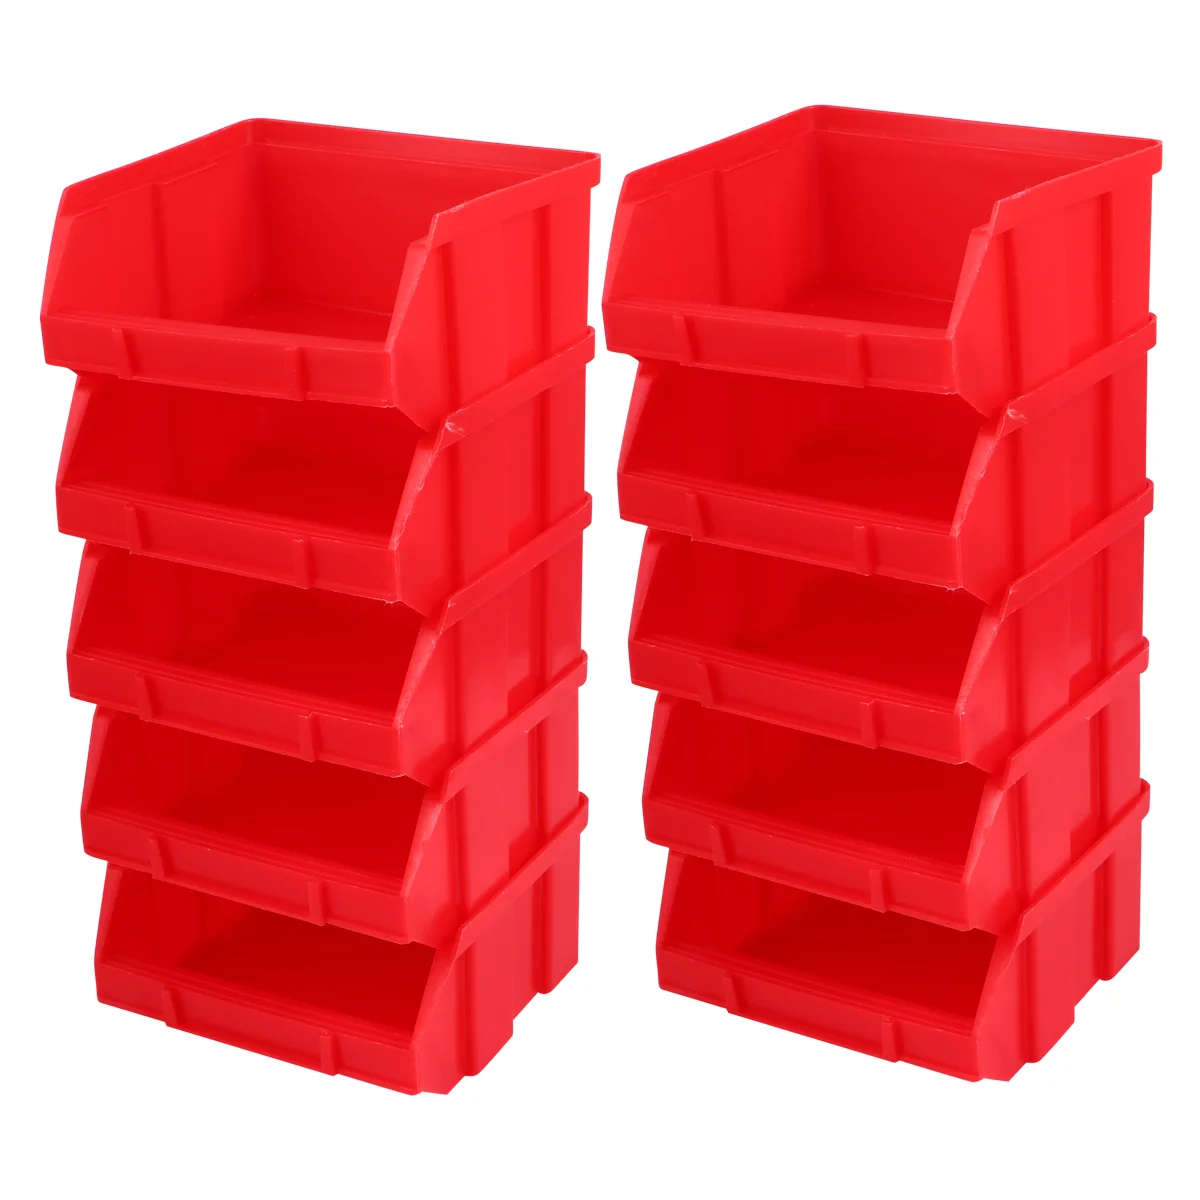 

10 Cs/Package Parts Box Storage Case Plastic Container Bins Toys Rack Pp Work Portable Shelves